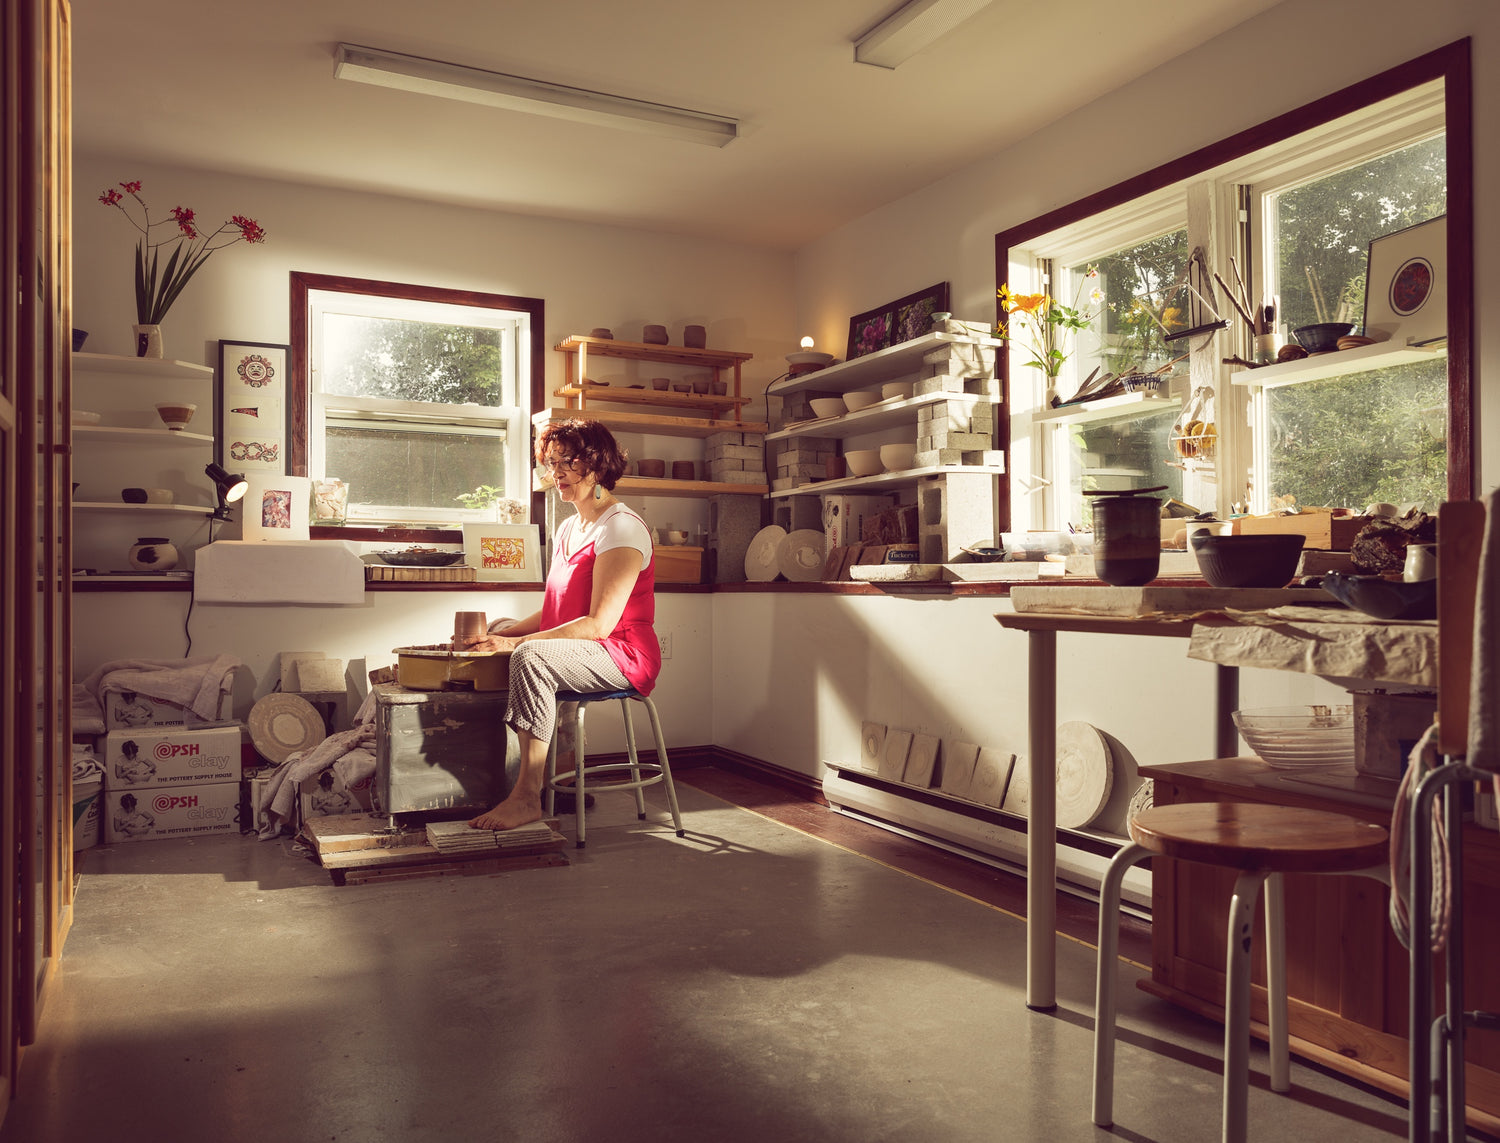 Coralie Huckel dans son atelier de poterie en Estrie